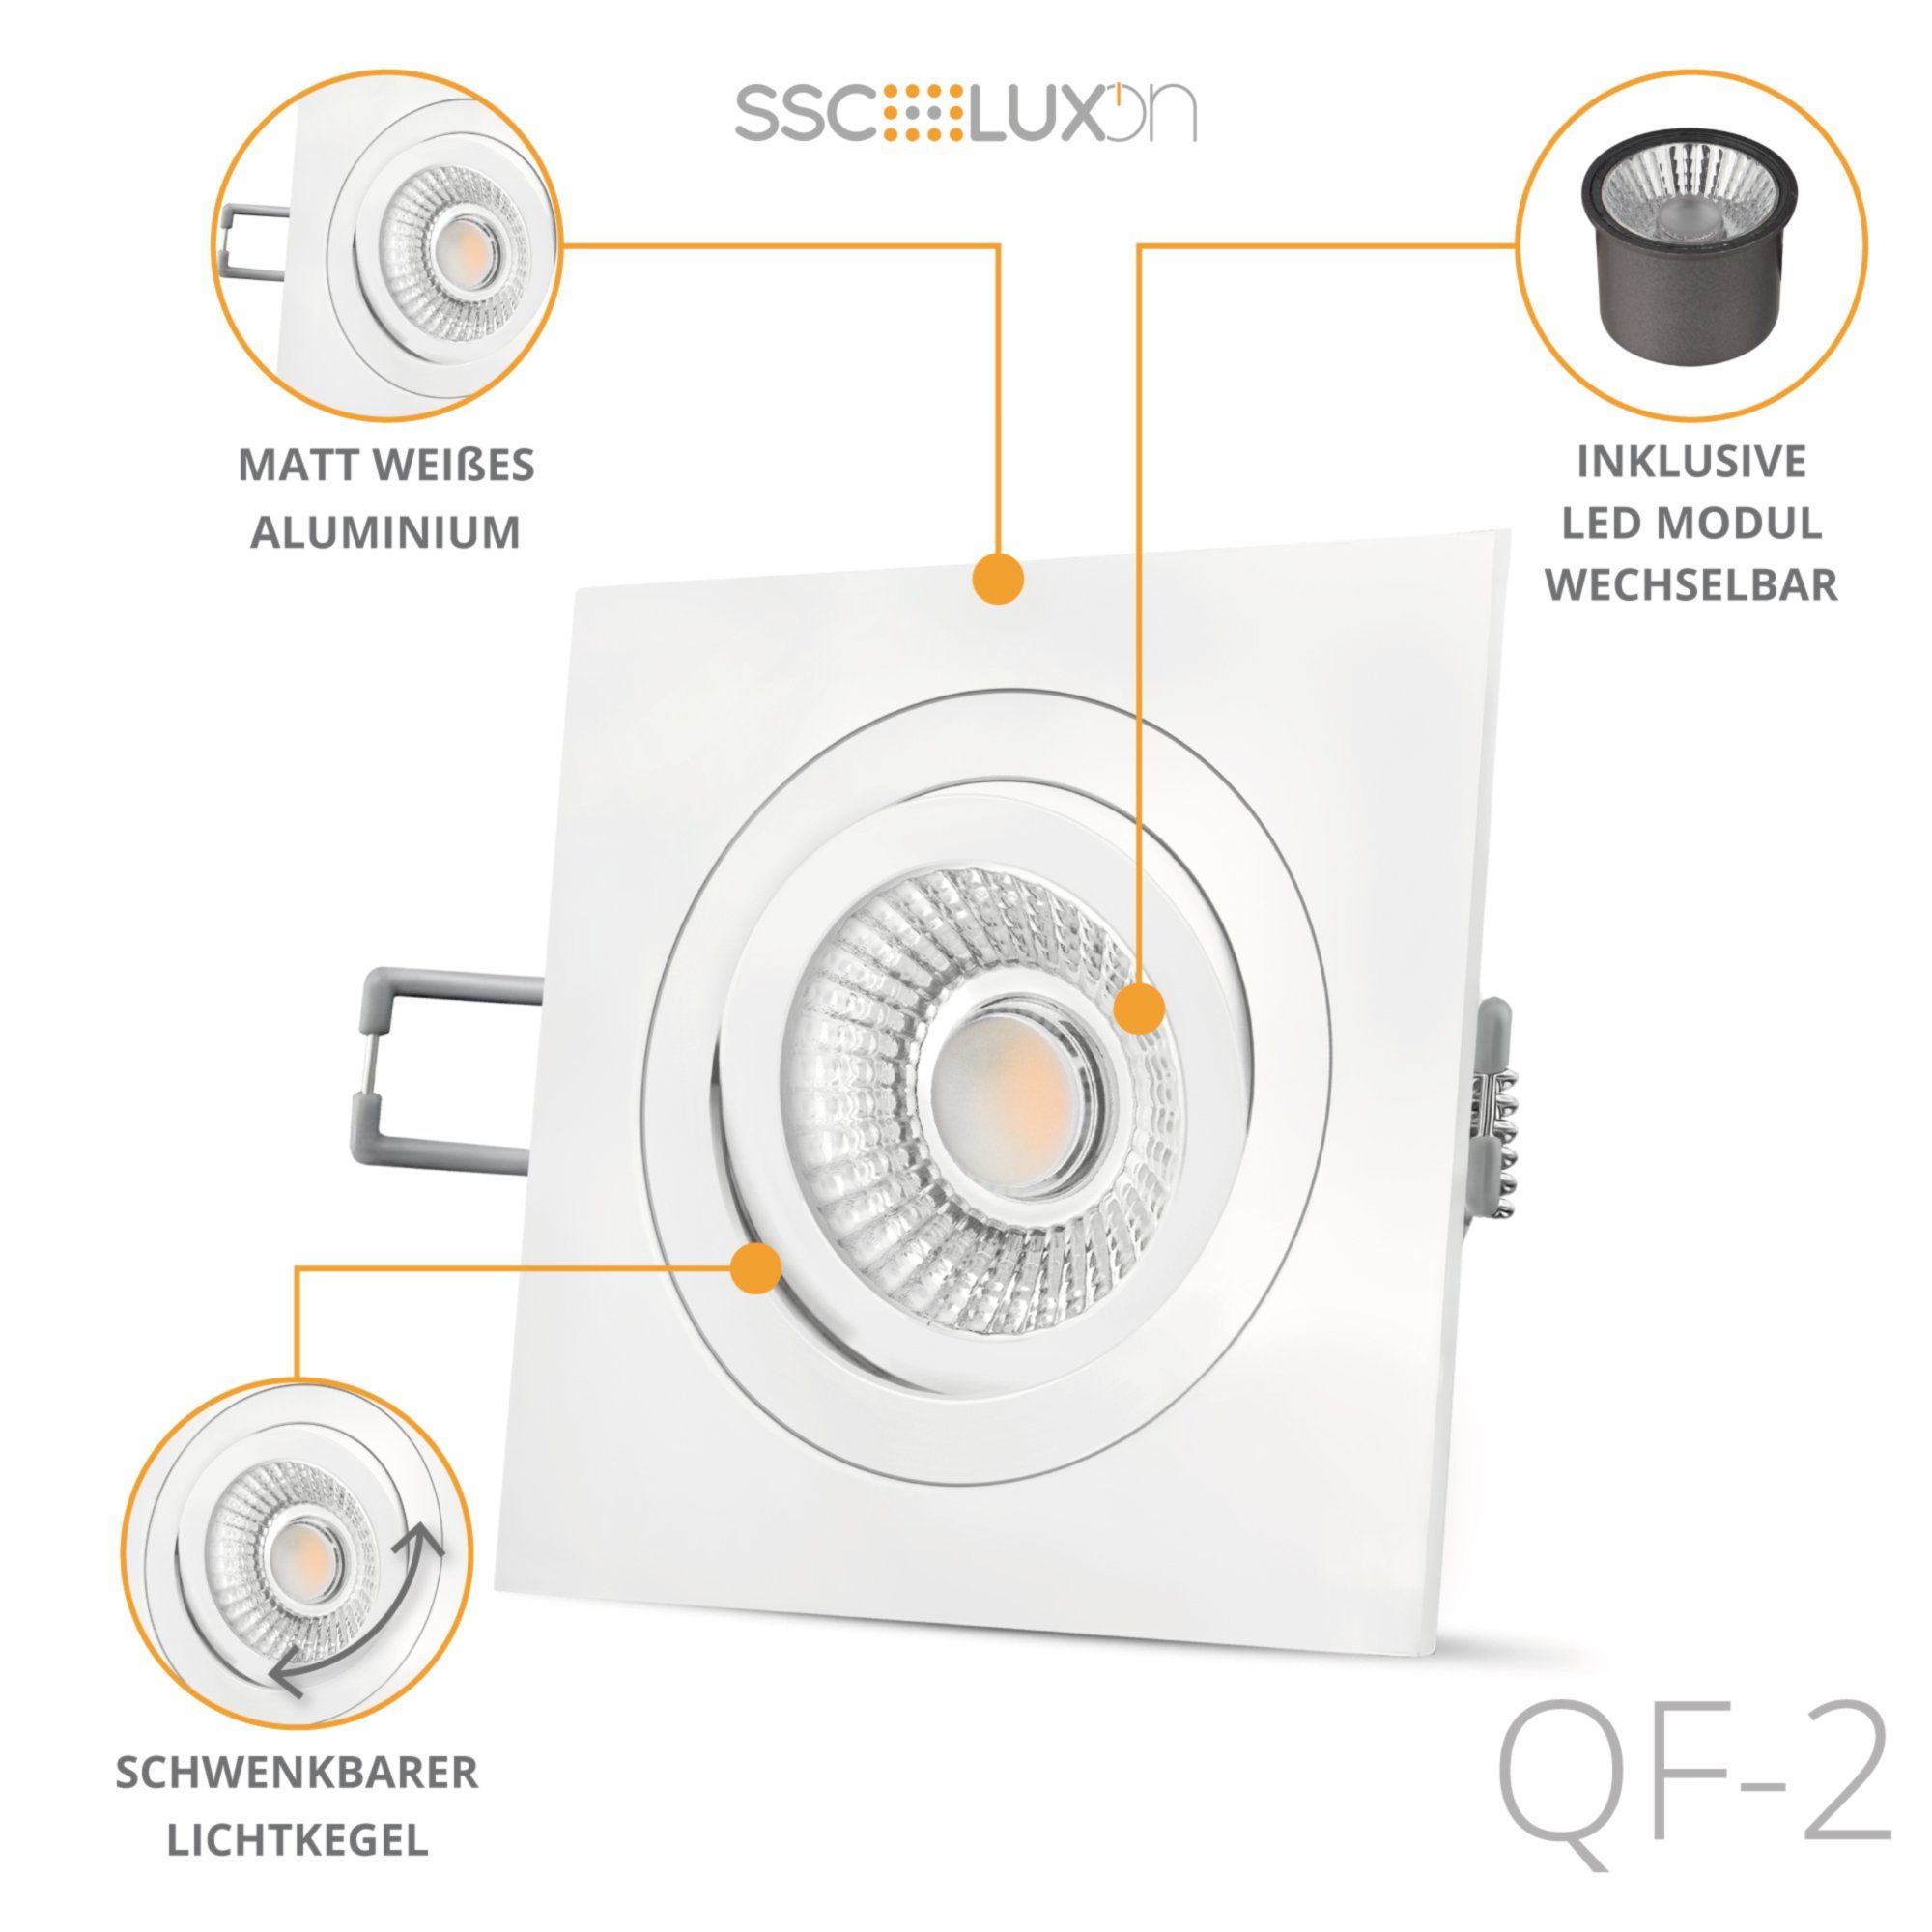 SSC-LUXon LED QF-2 mit Einbauspot warmweiss, Modul LED Warmweiß dimmbarem schwenkbar LED 6W Einbaustrahler